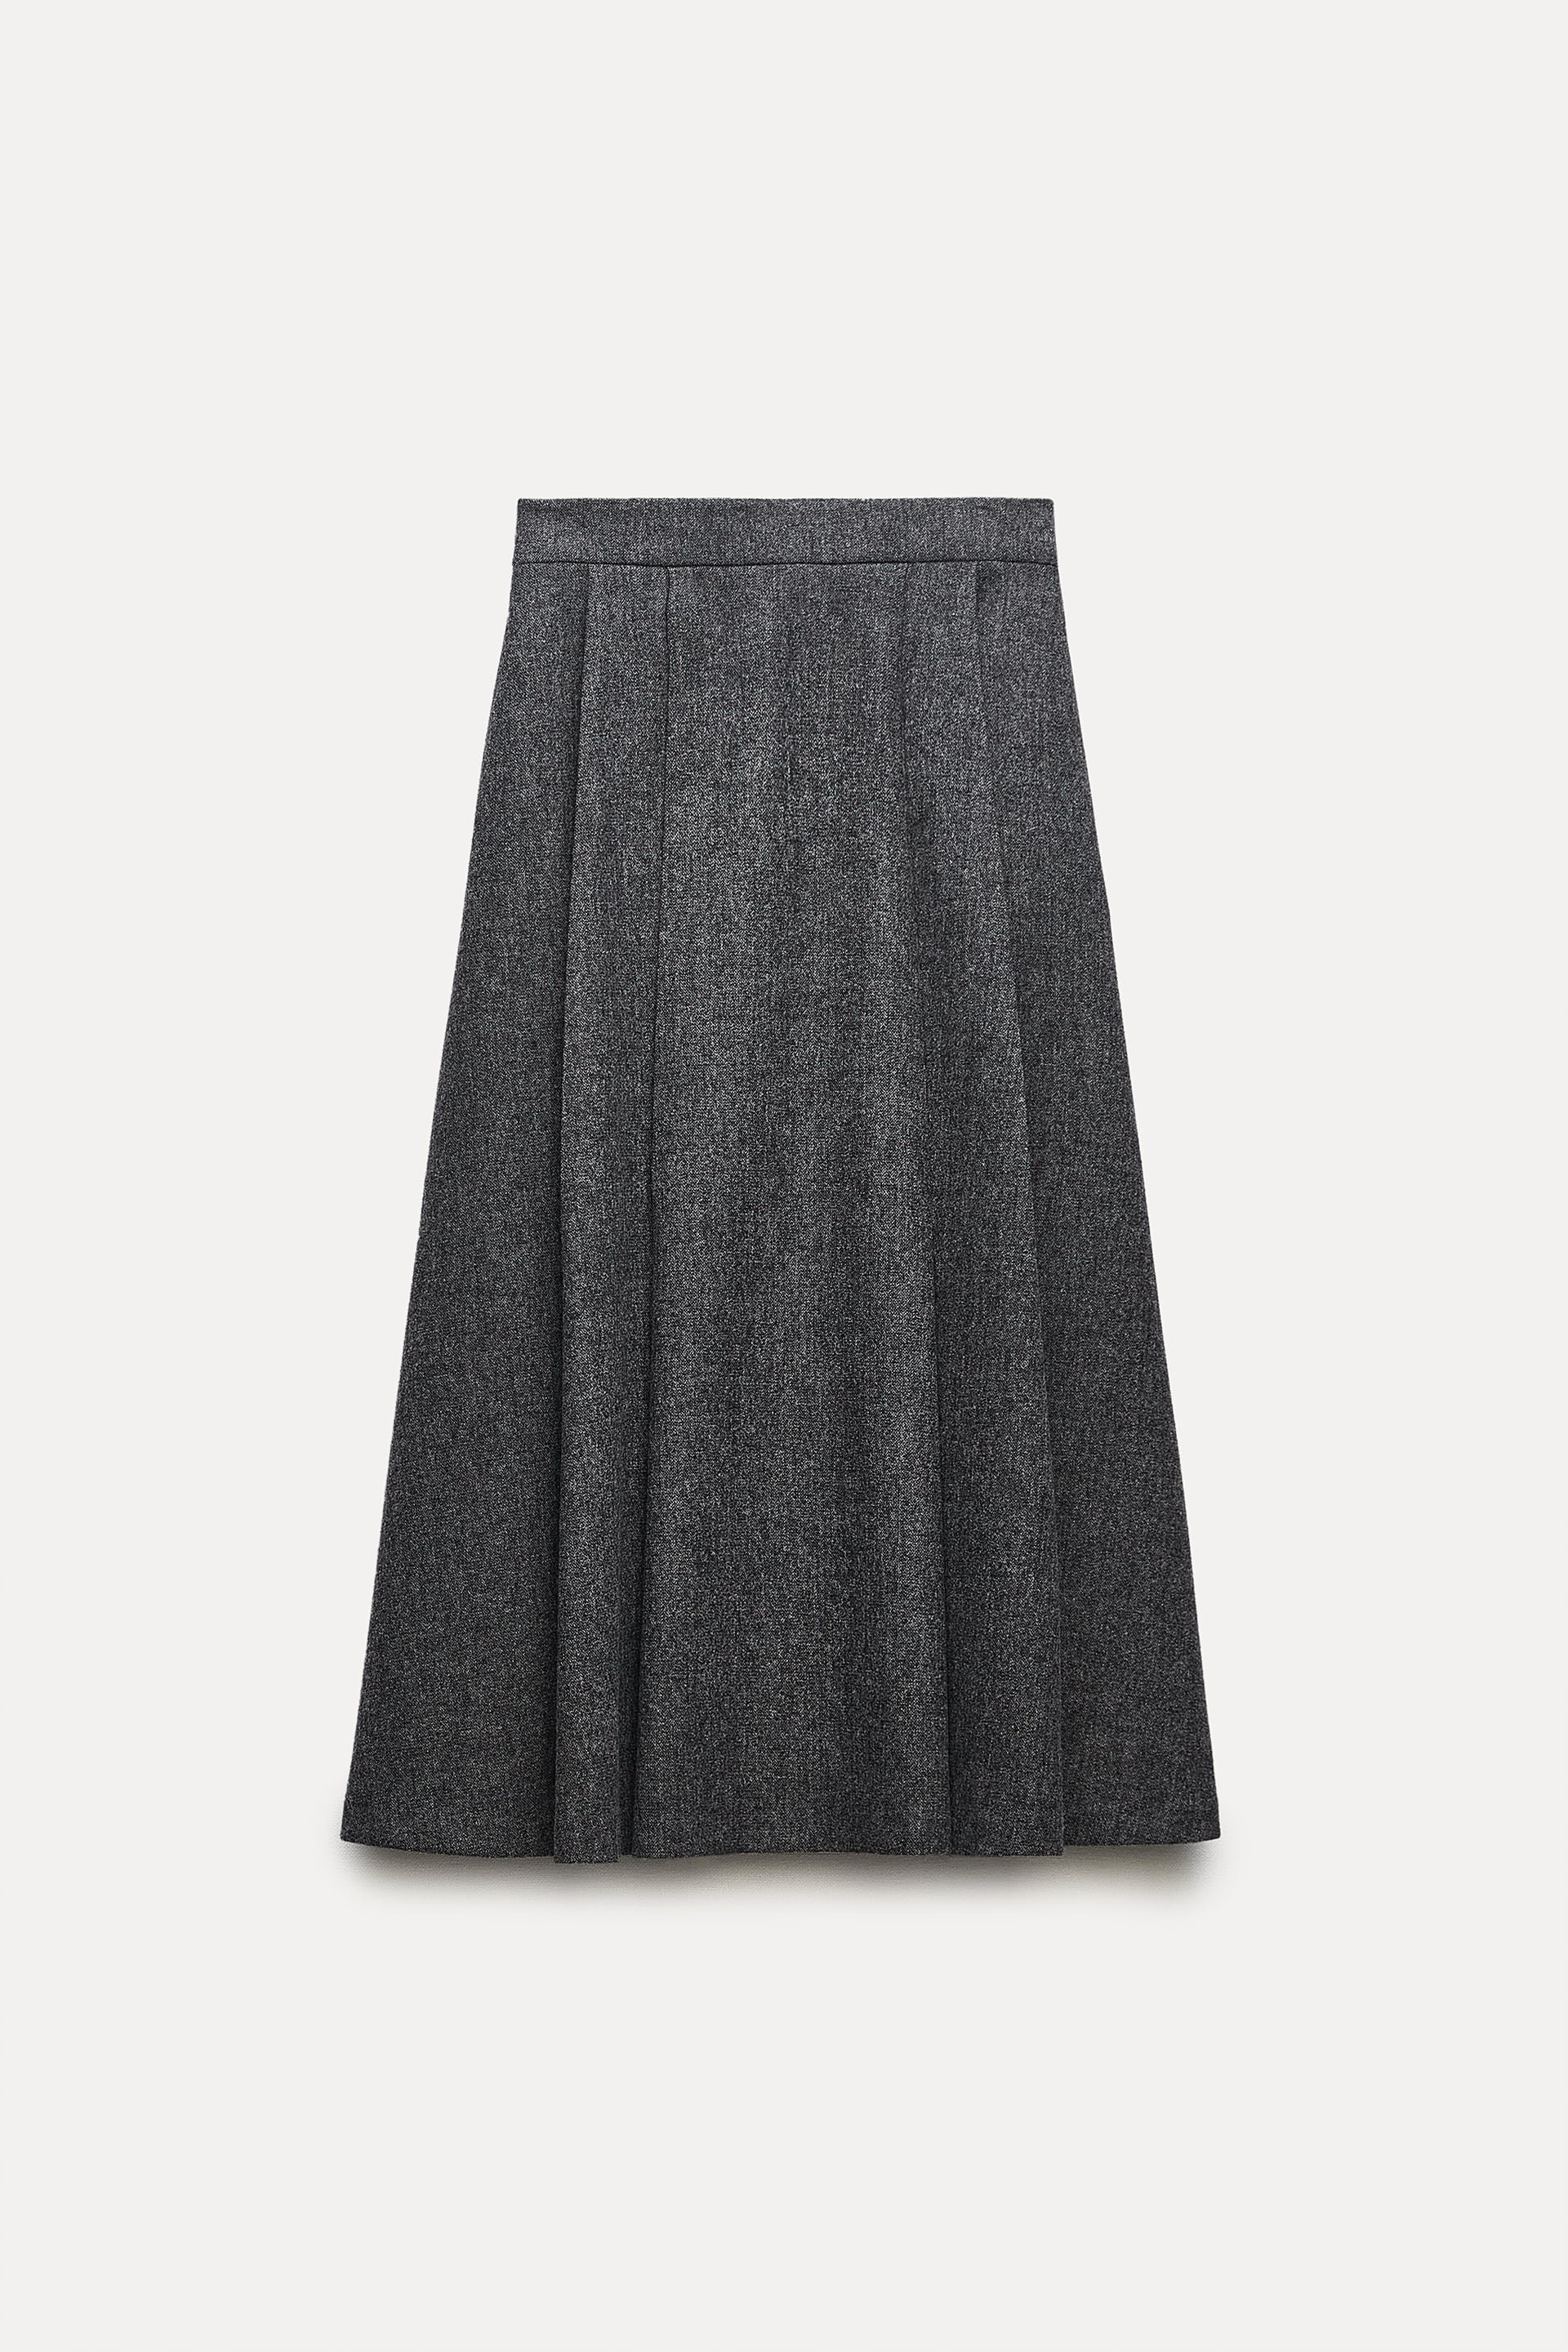 Zara ZW Collection Wool-Blend Midi Skirt in Grey.jpg